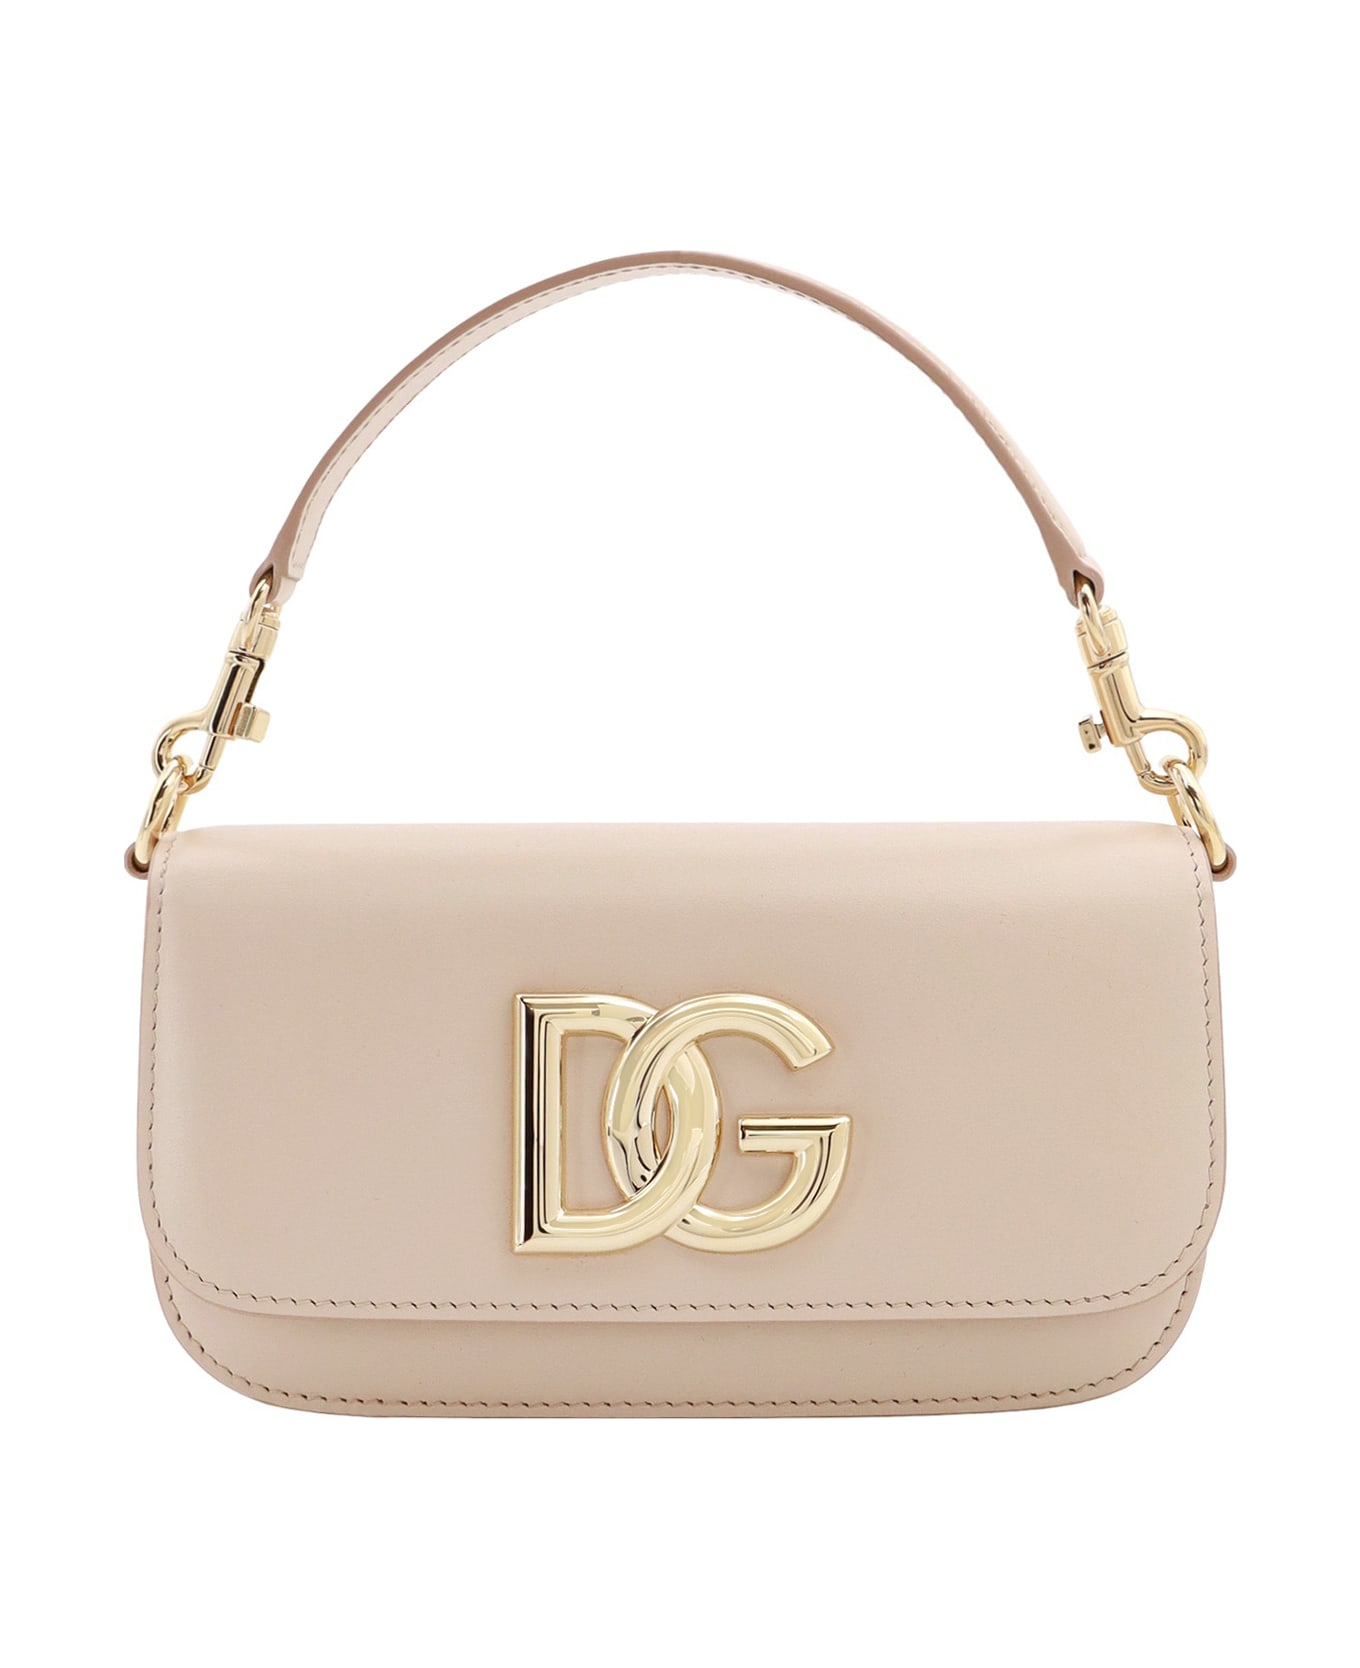 Dolce & Gabbana Leather Bag - Beige ショルダーバッグ